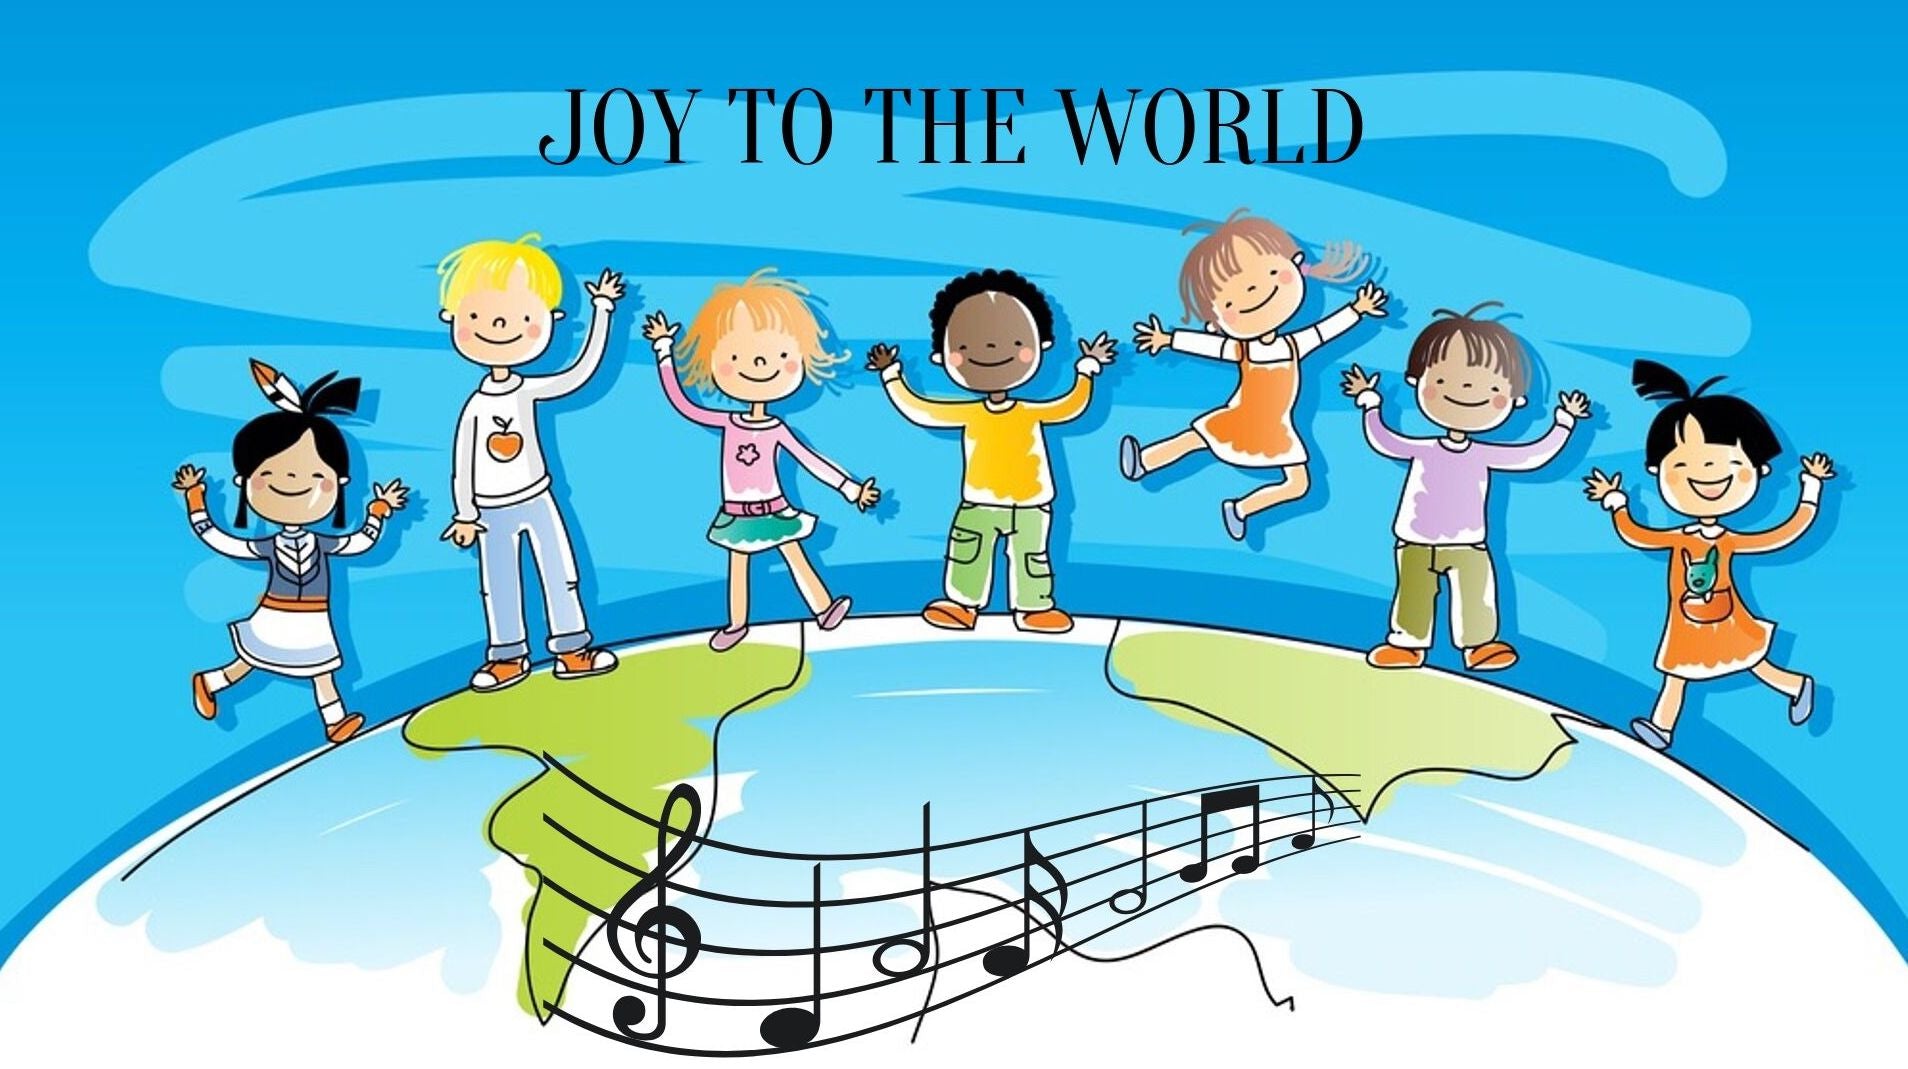 kids, globe, music notes, "Joy to the World"